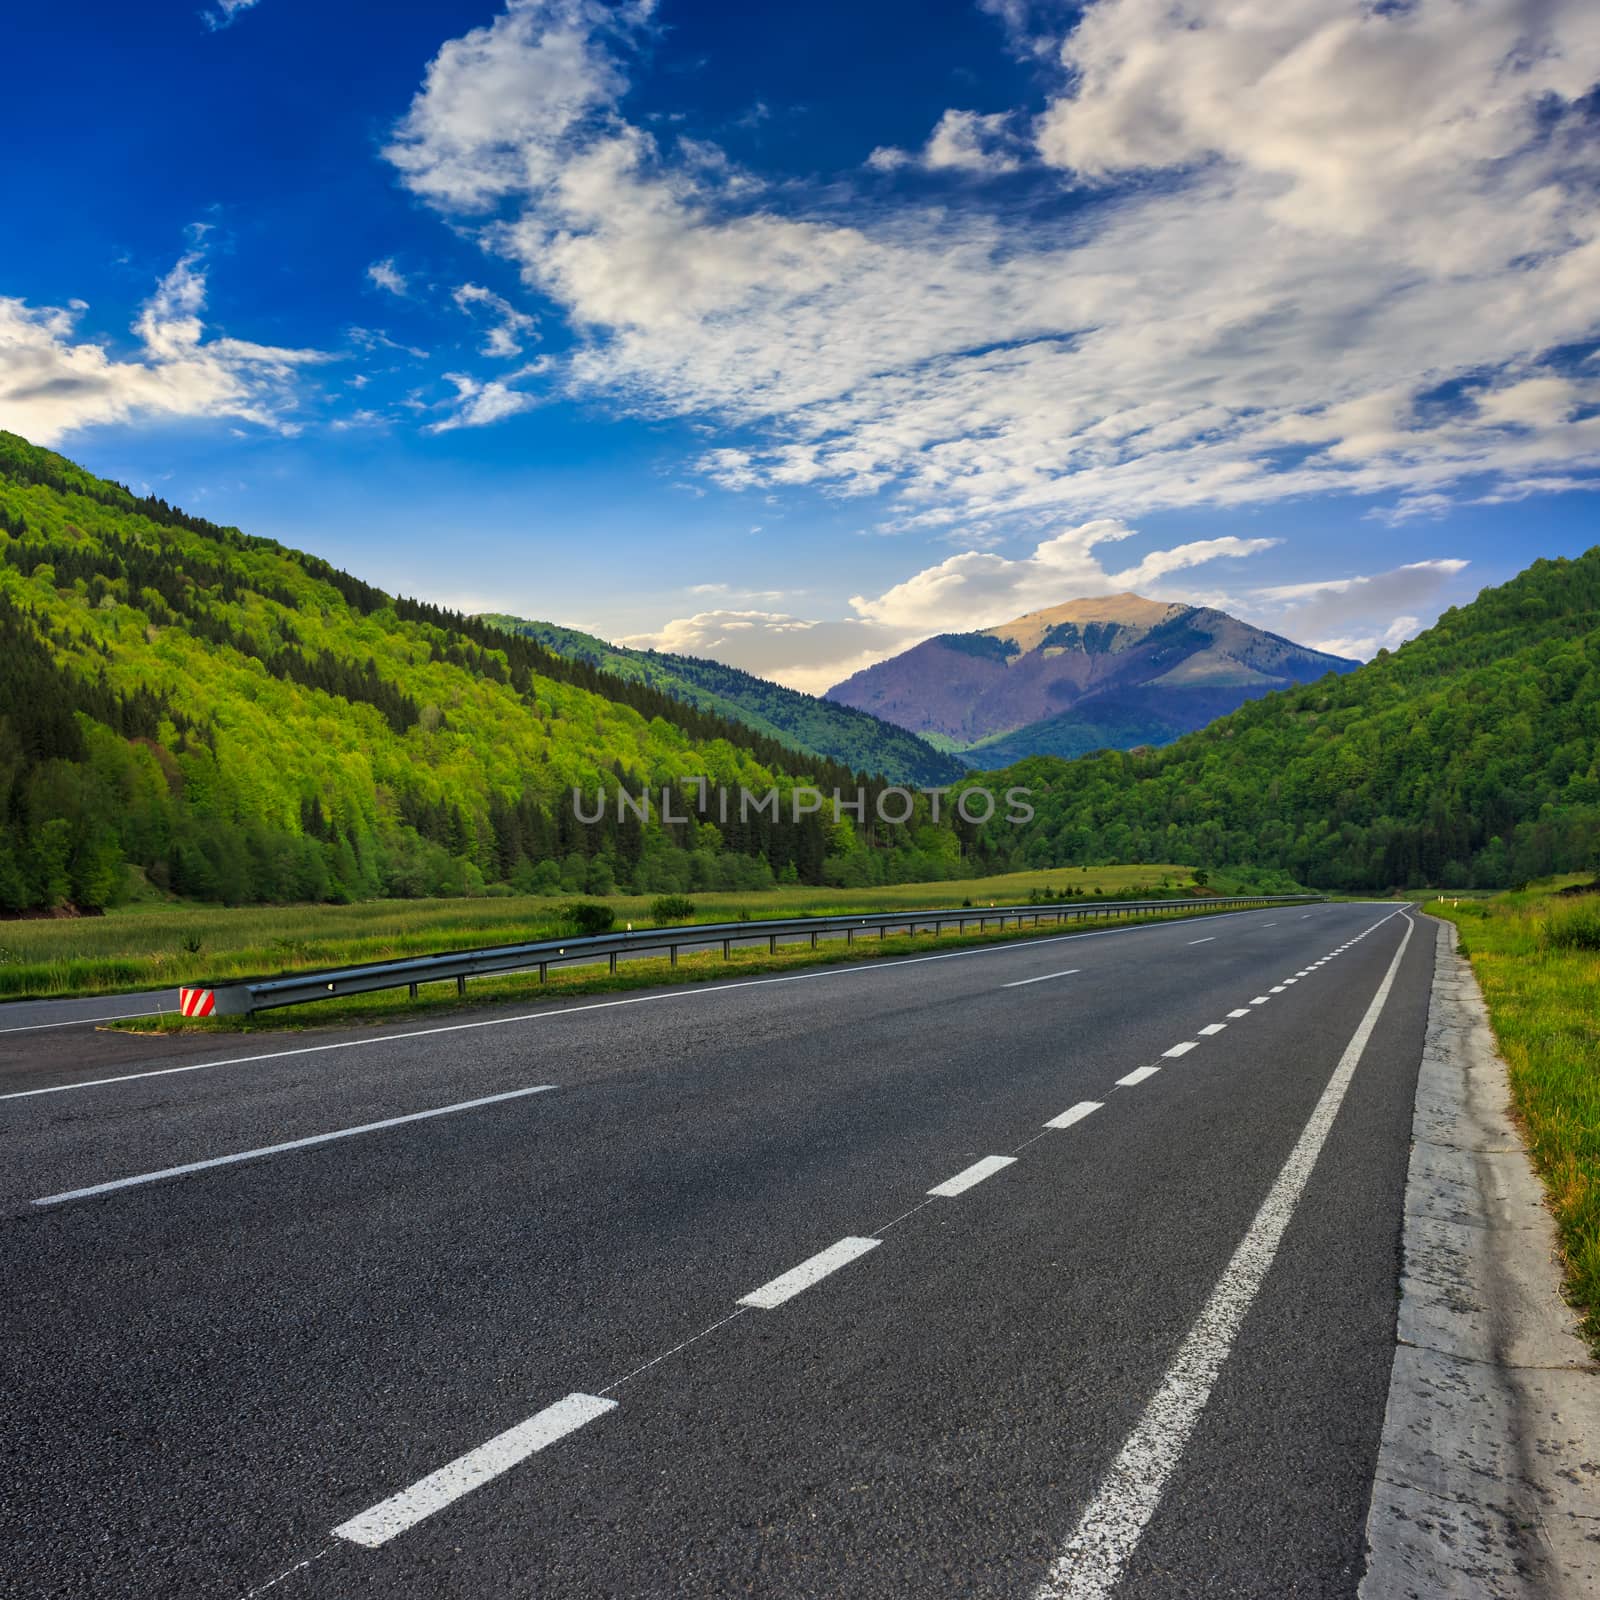 asphalt road in mountains by Pellinni